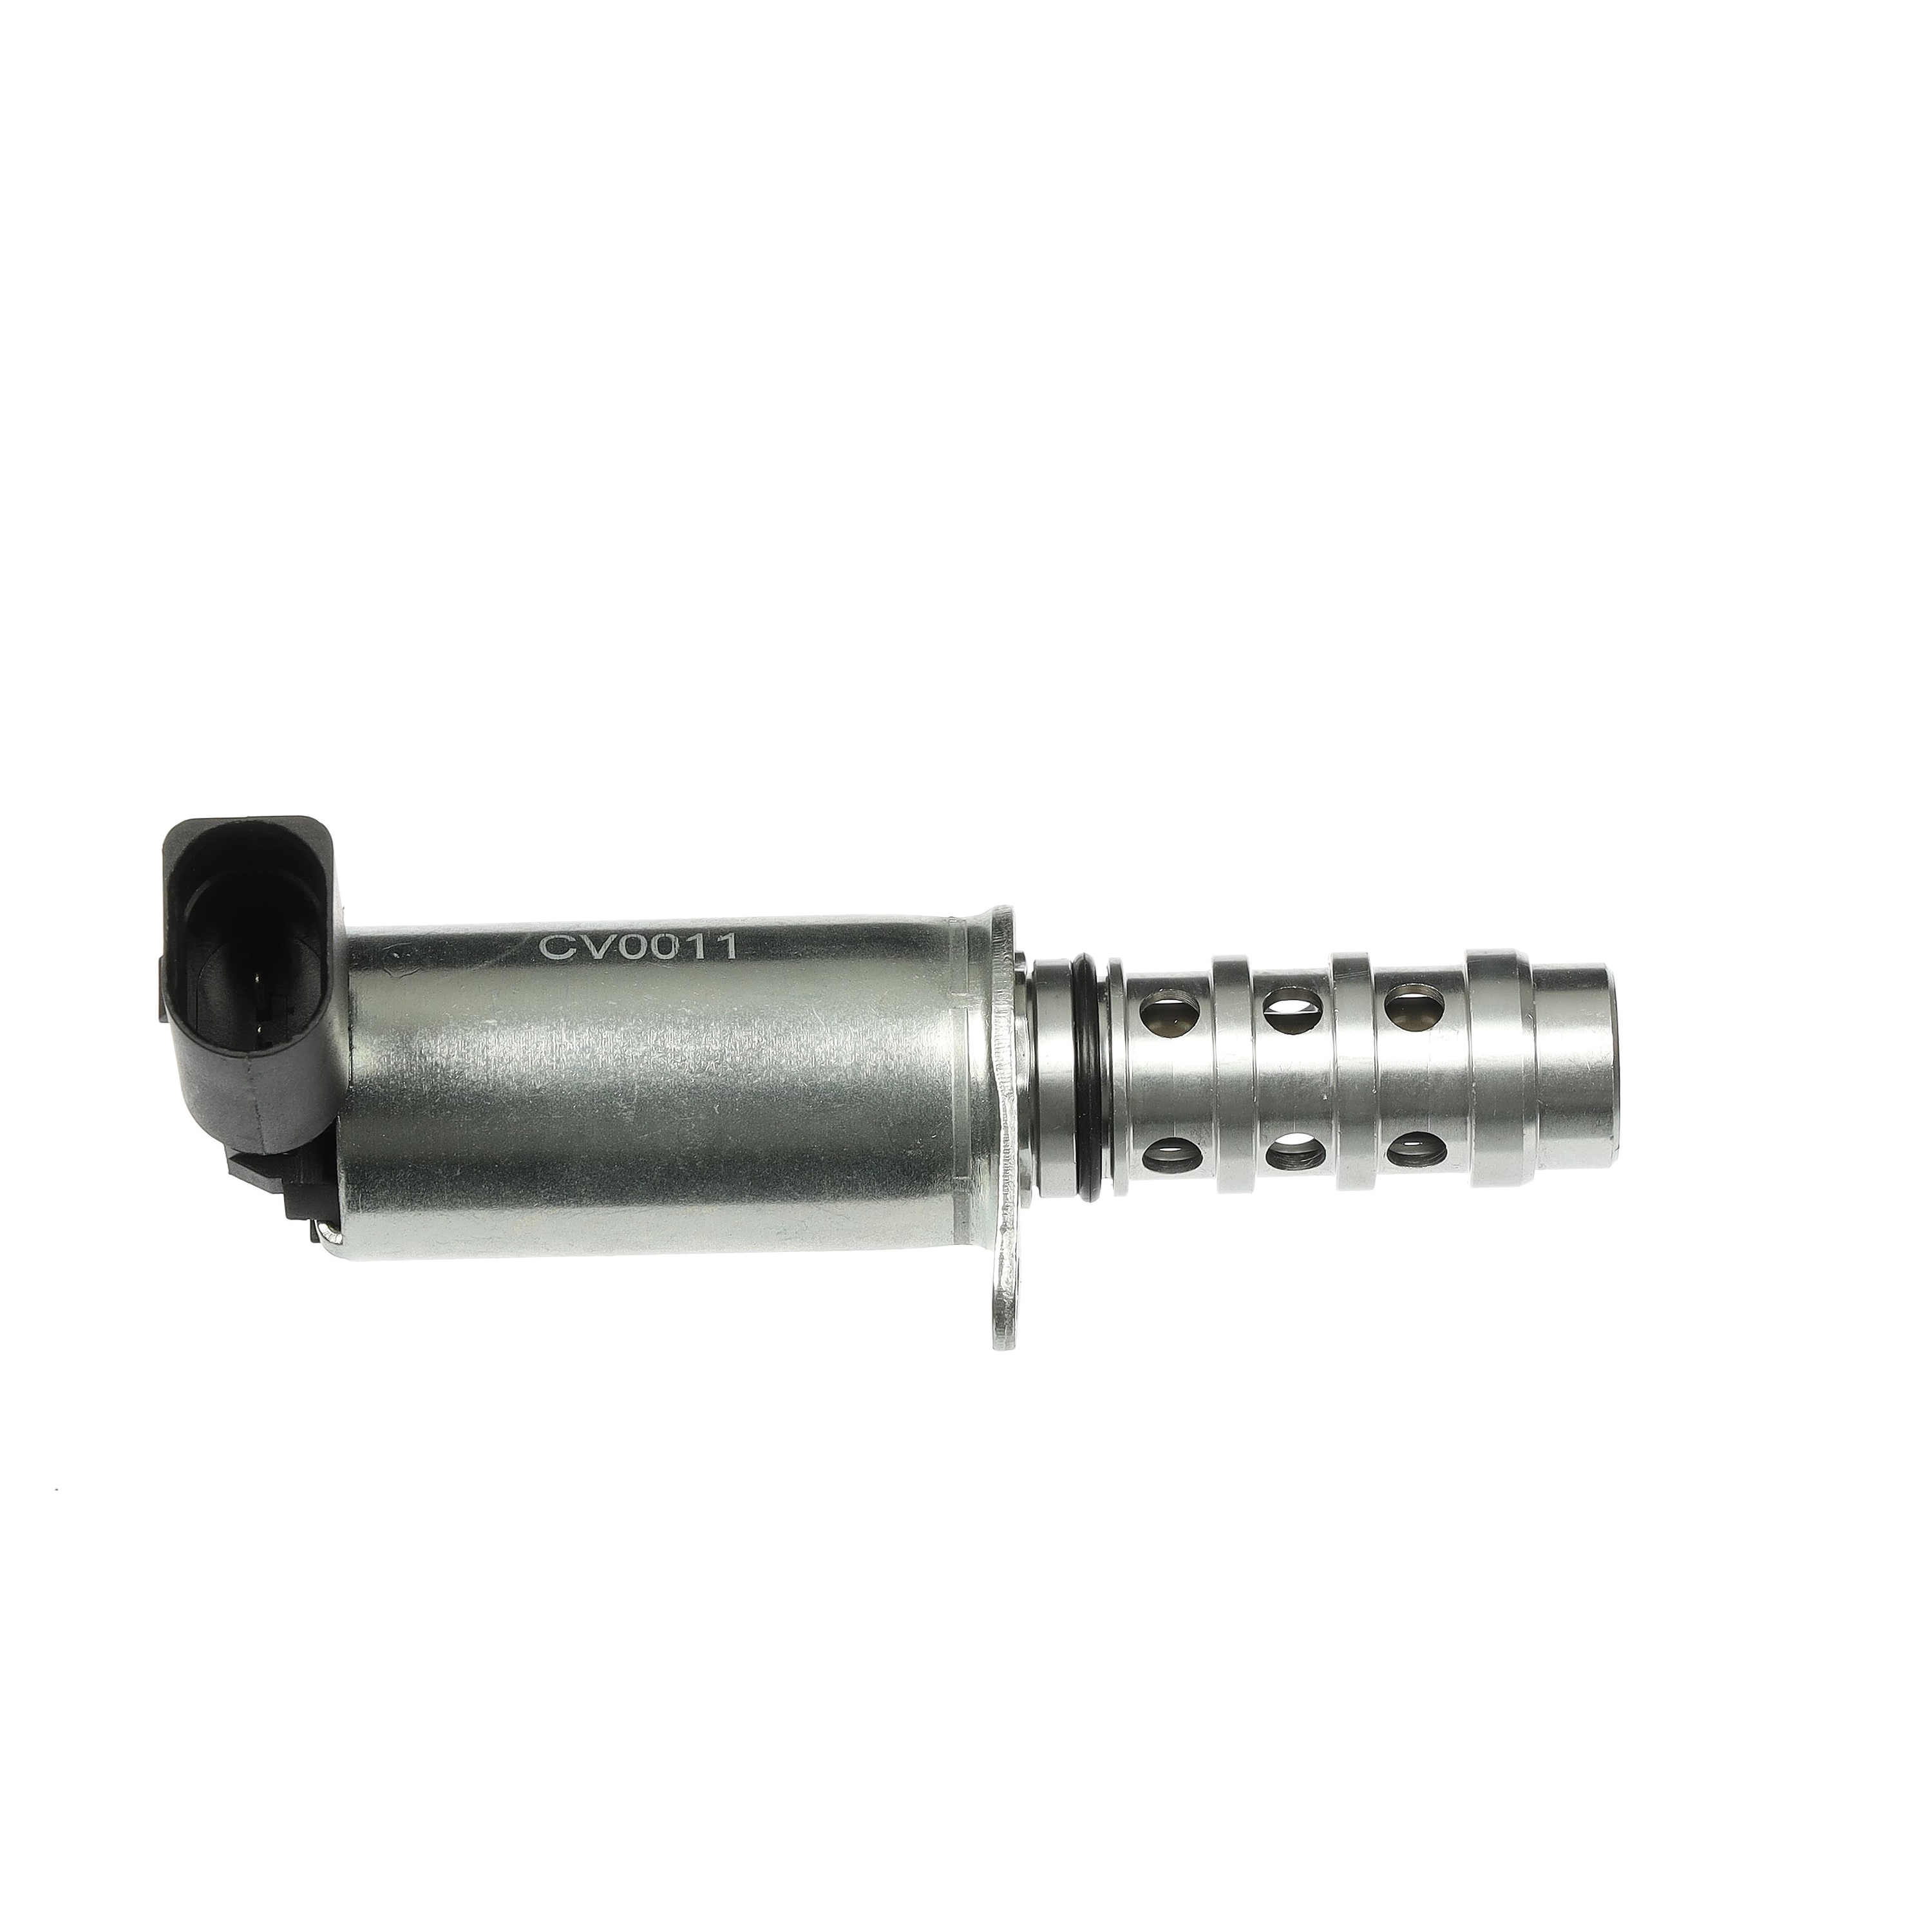 Camshaft control valve ET ENGINETEAM with seal ring - CV0011